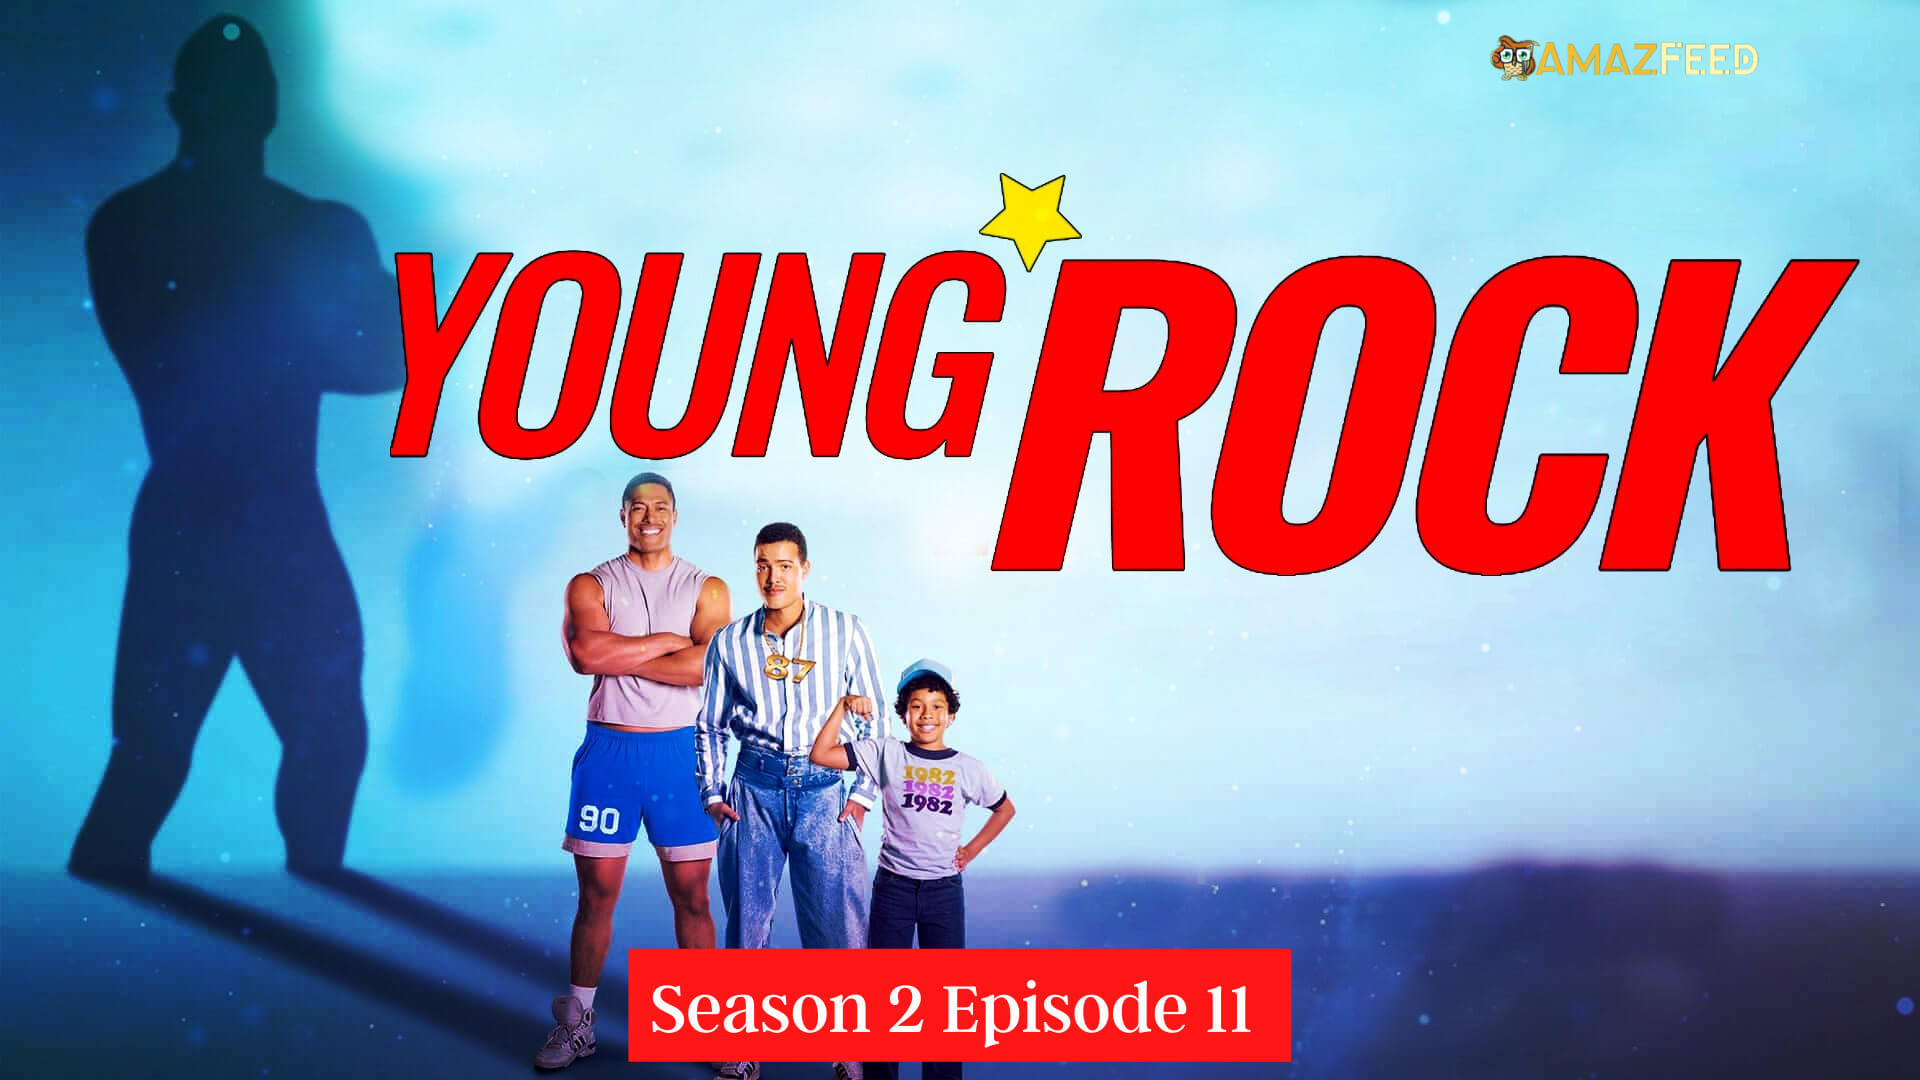 Young Rock Season 2 Episode 11 Release Date